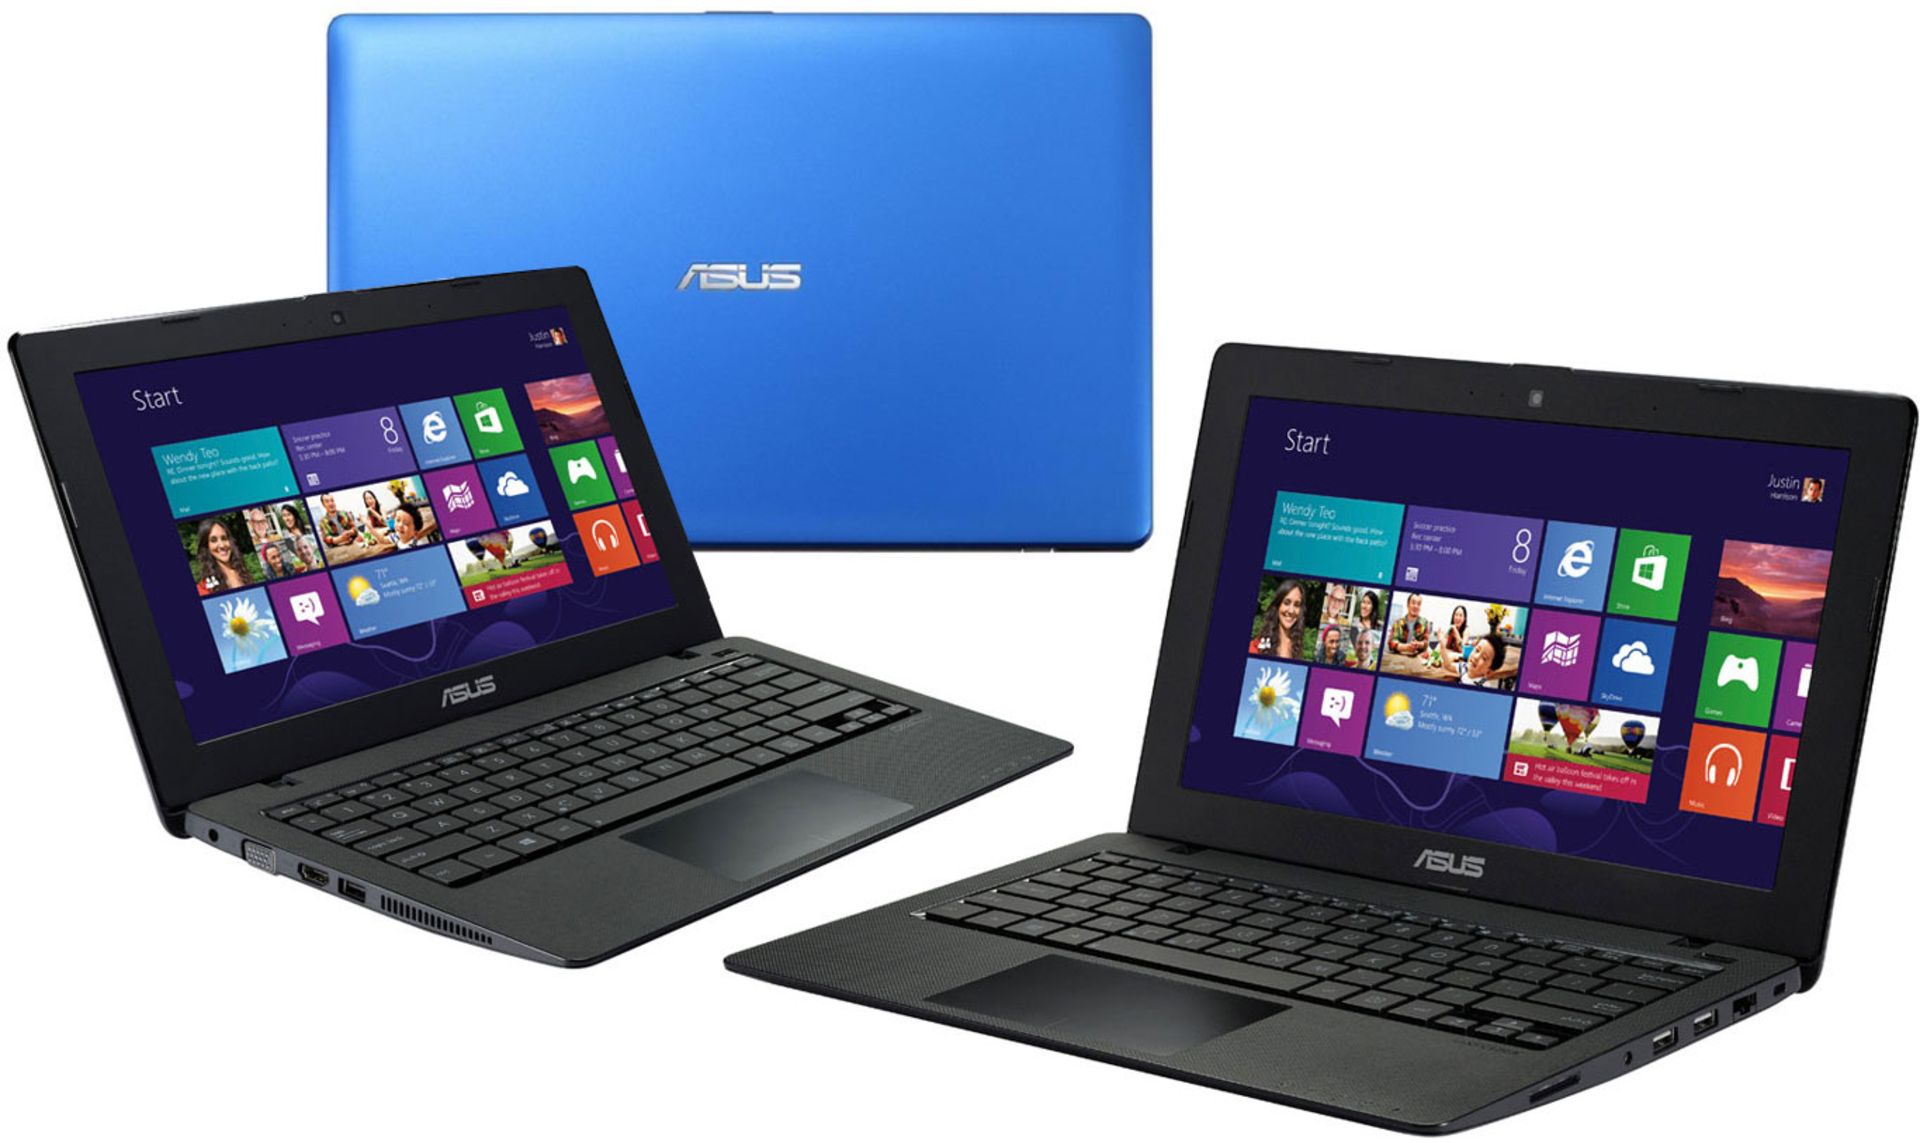 Asus X200Ca-Ct157H 11.6" Netbook, 1.5Ghz, 4Gb, 500Gb, Windows 8 (Refurbished, Grade: B, 6 Months